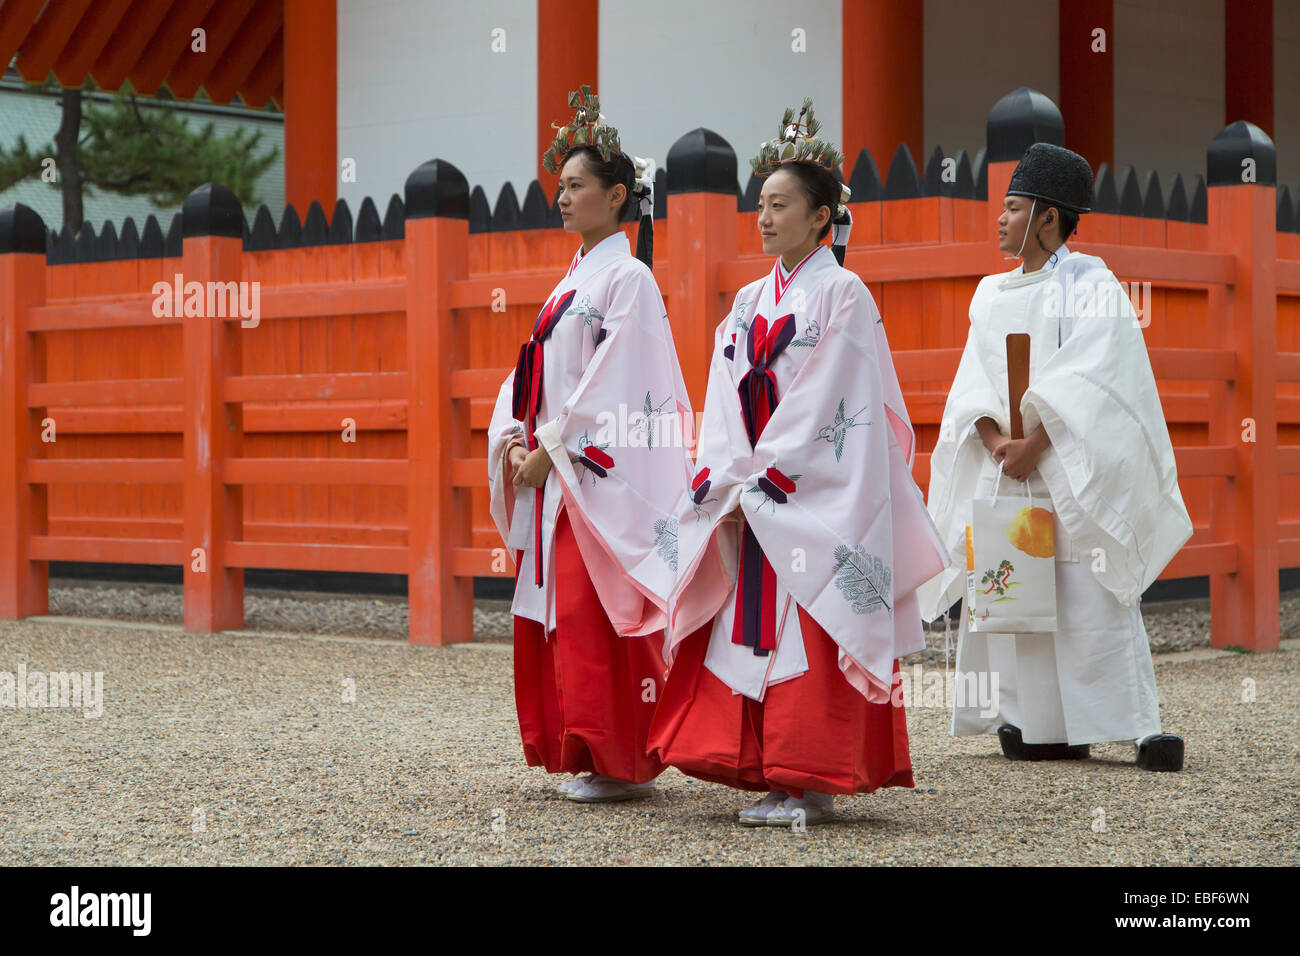 Shrine Maidens And Priest At Traditional Wedding Ceremony At Shinto Shrine Of Sumiyoshi Taisha 